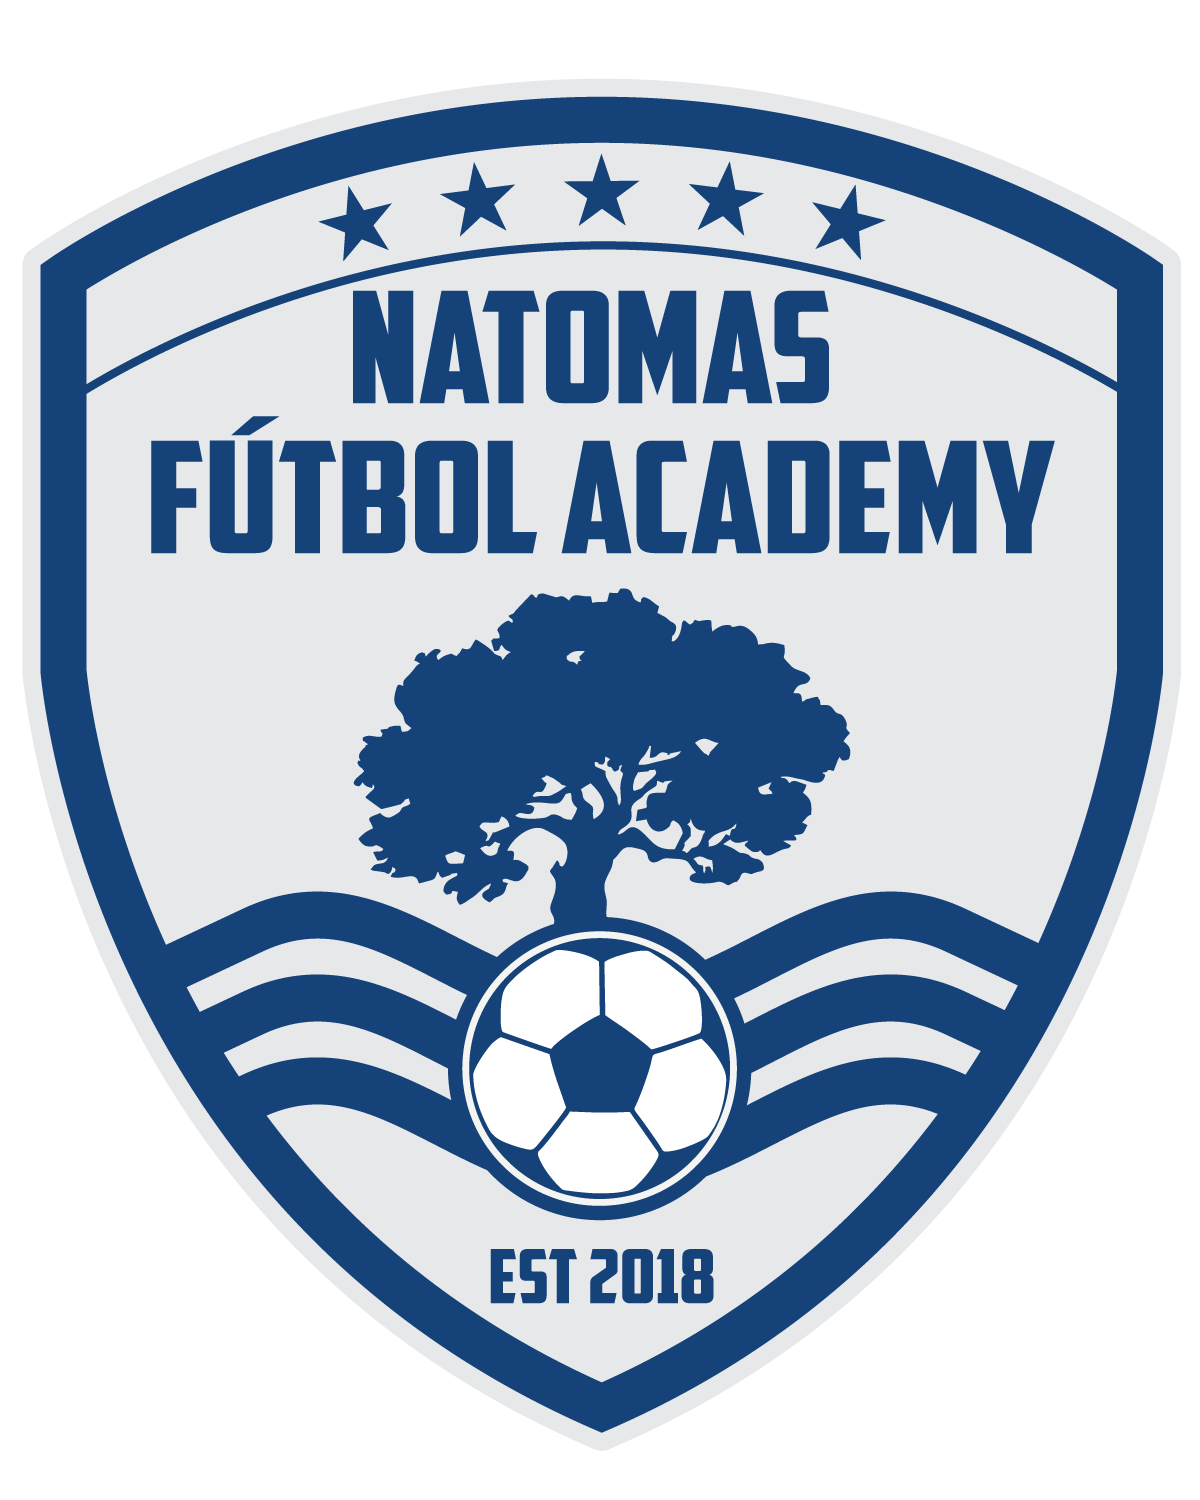 Natomas Futbol Academy team badge